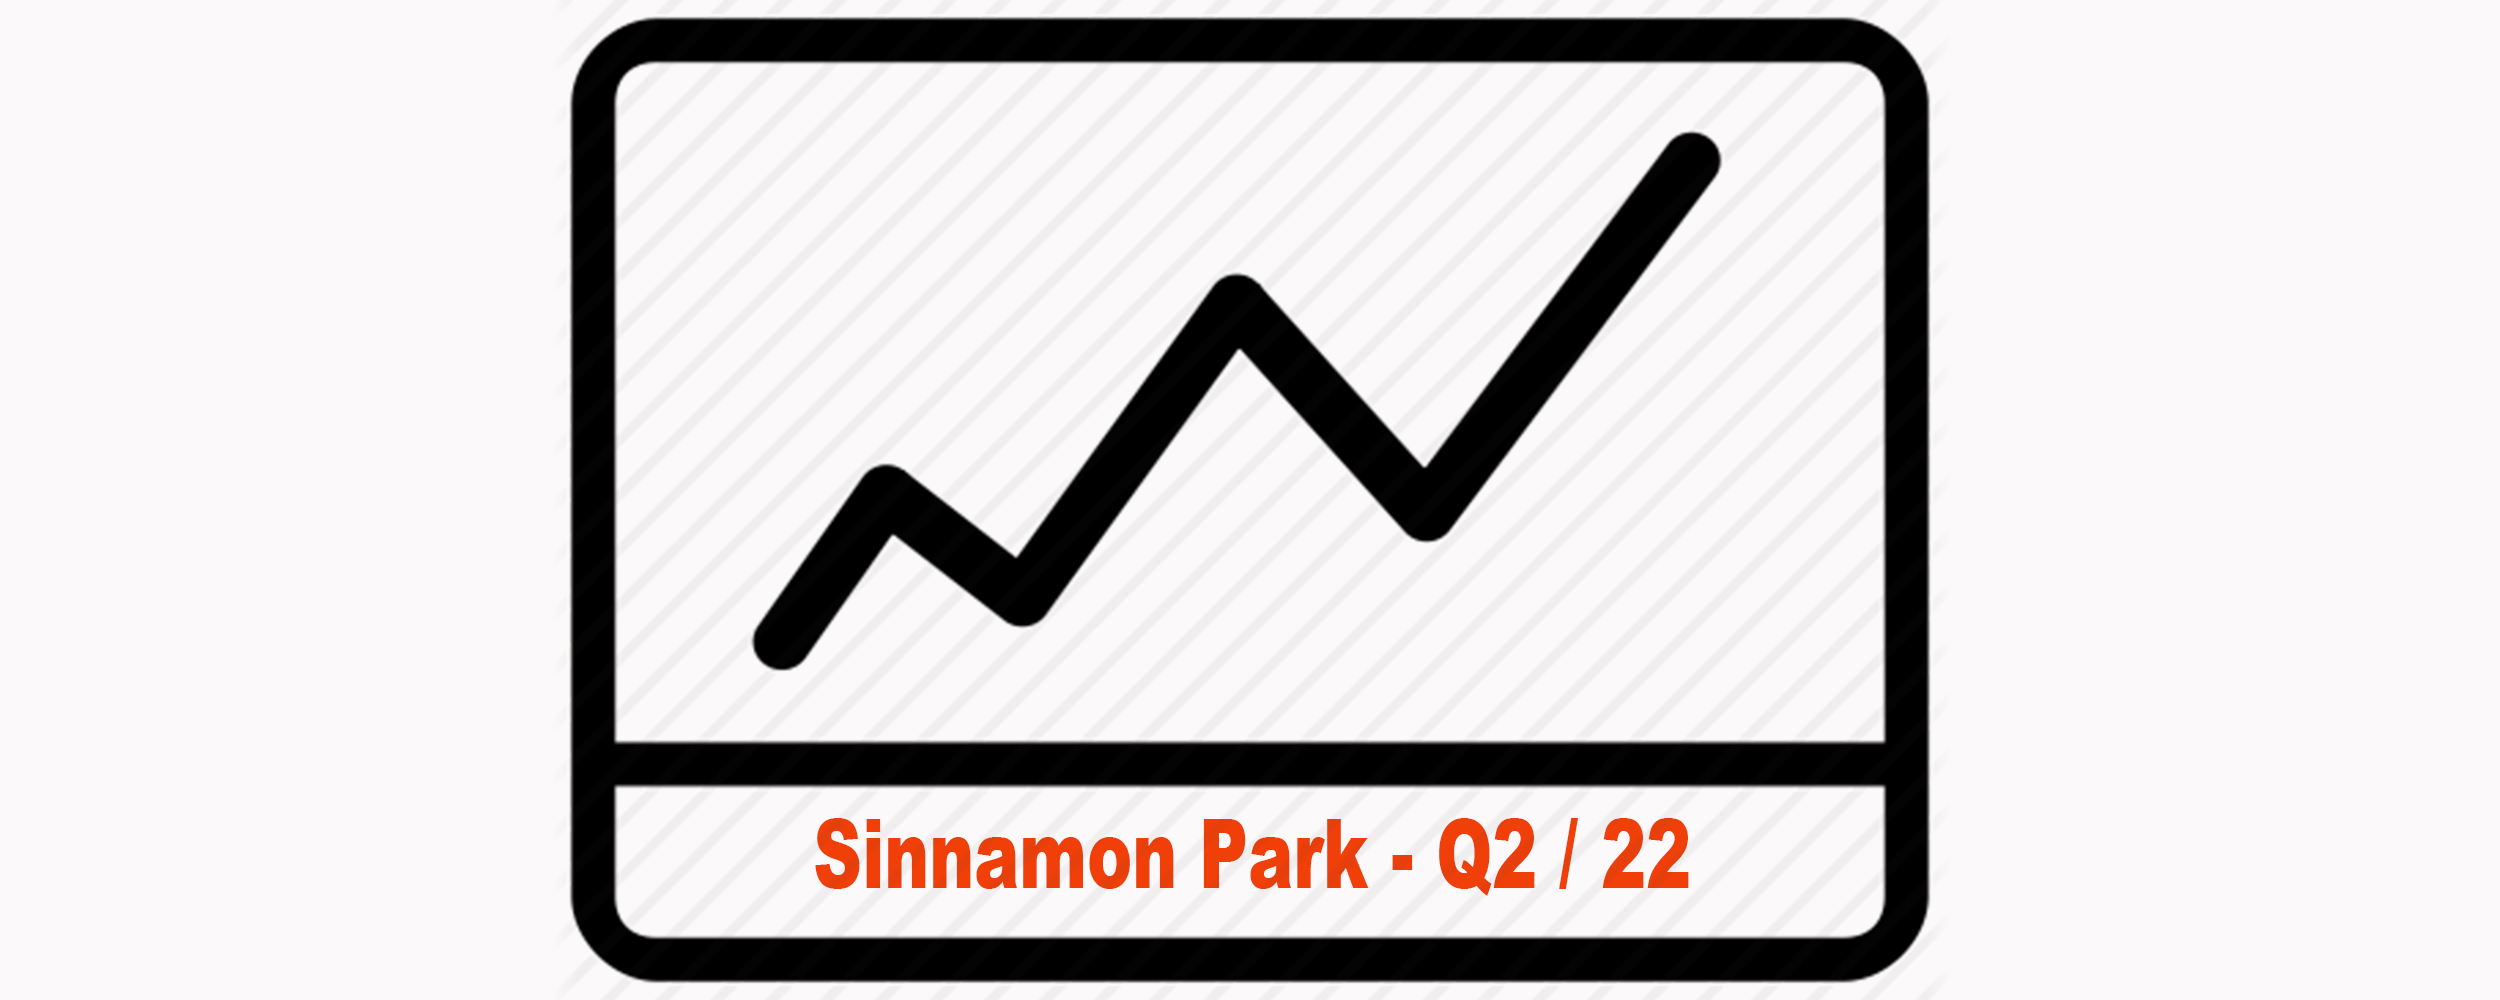 Your Local Market - Q2 /2022 Sinnamon Park